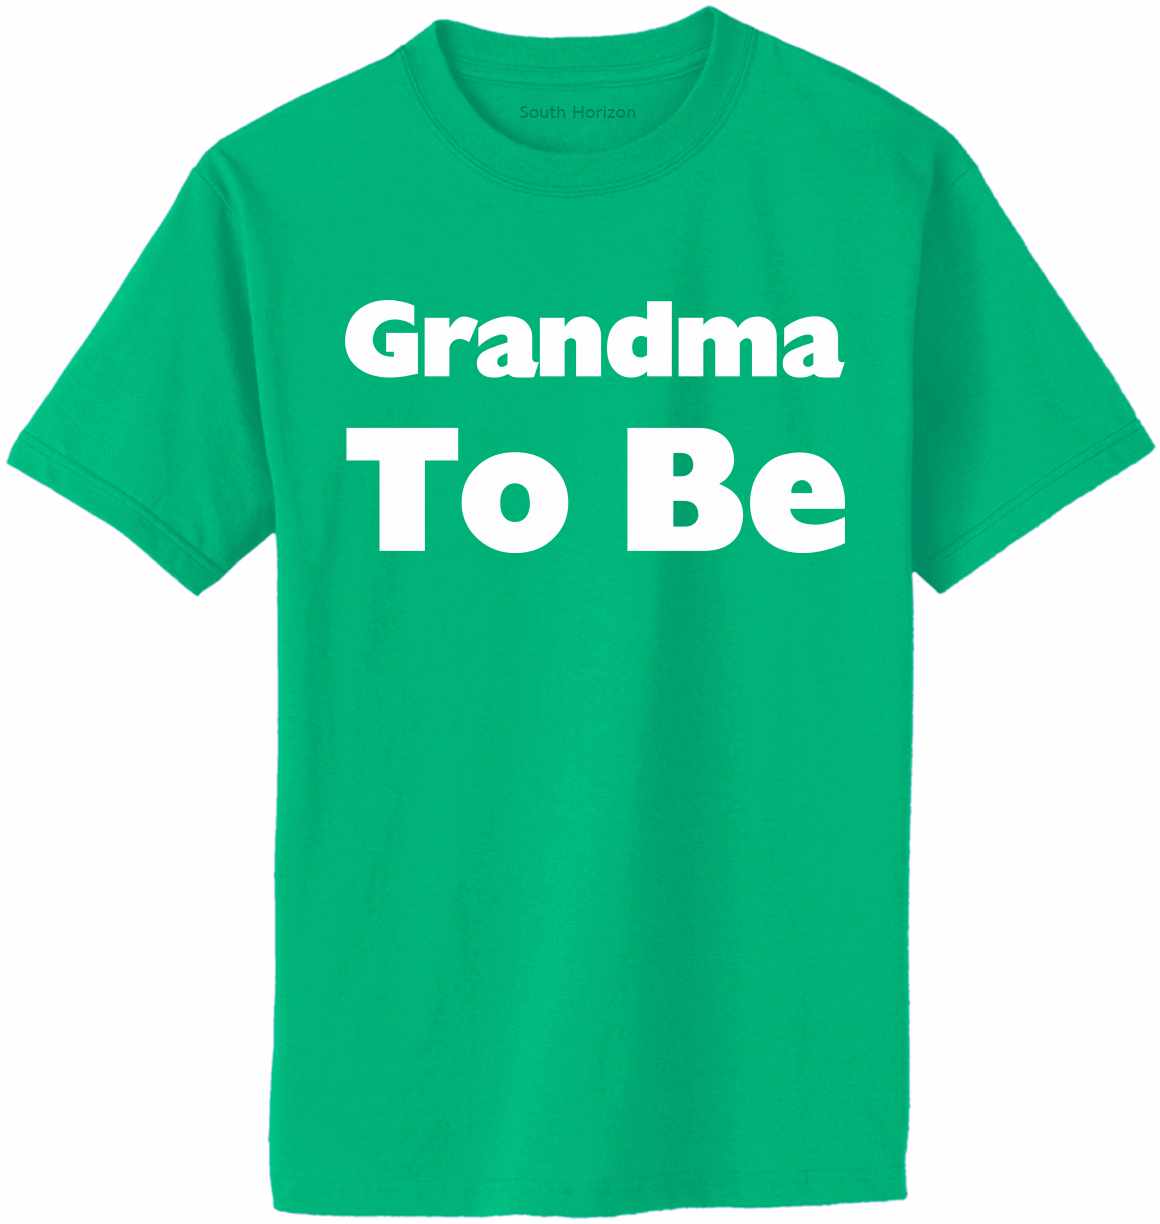 Grandma To Be on Adult T-Shirt